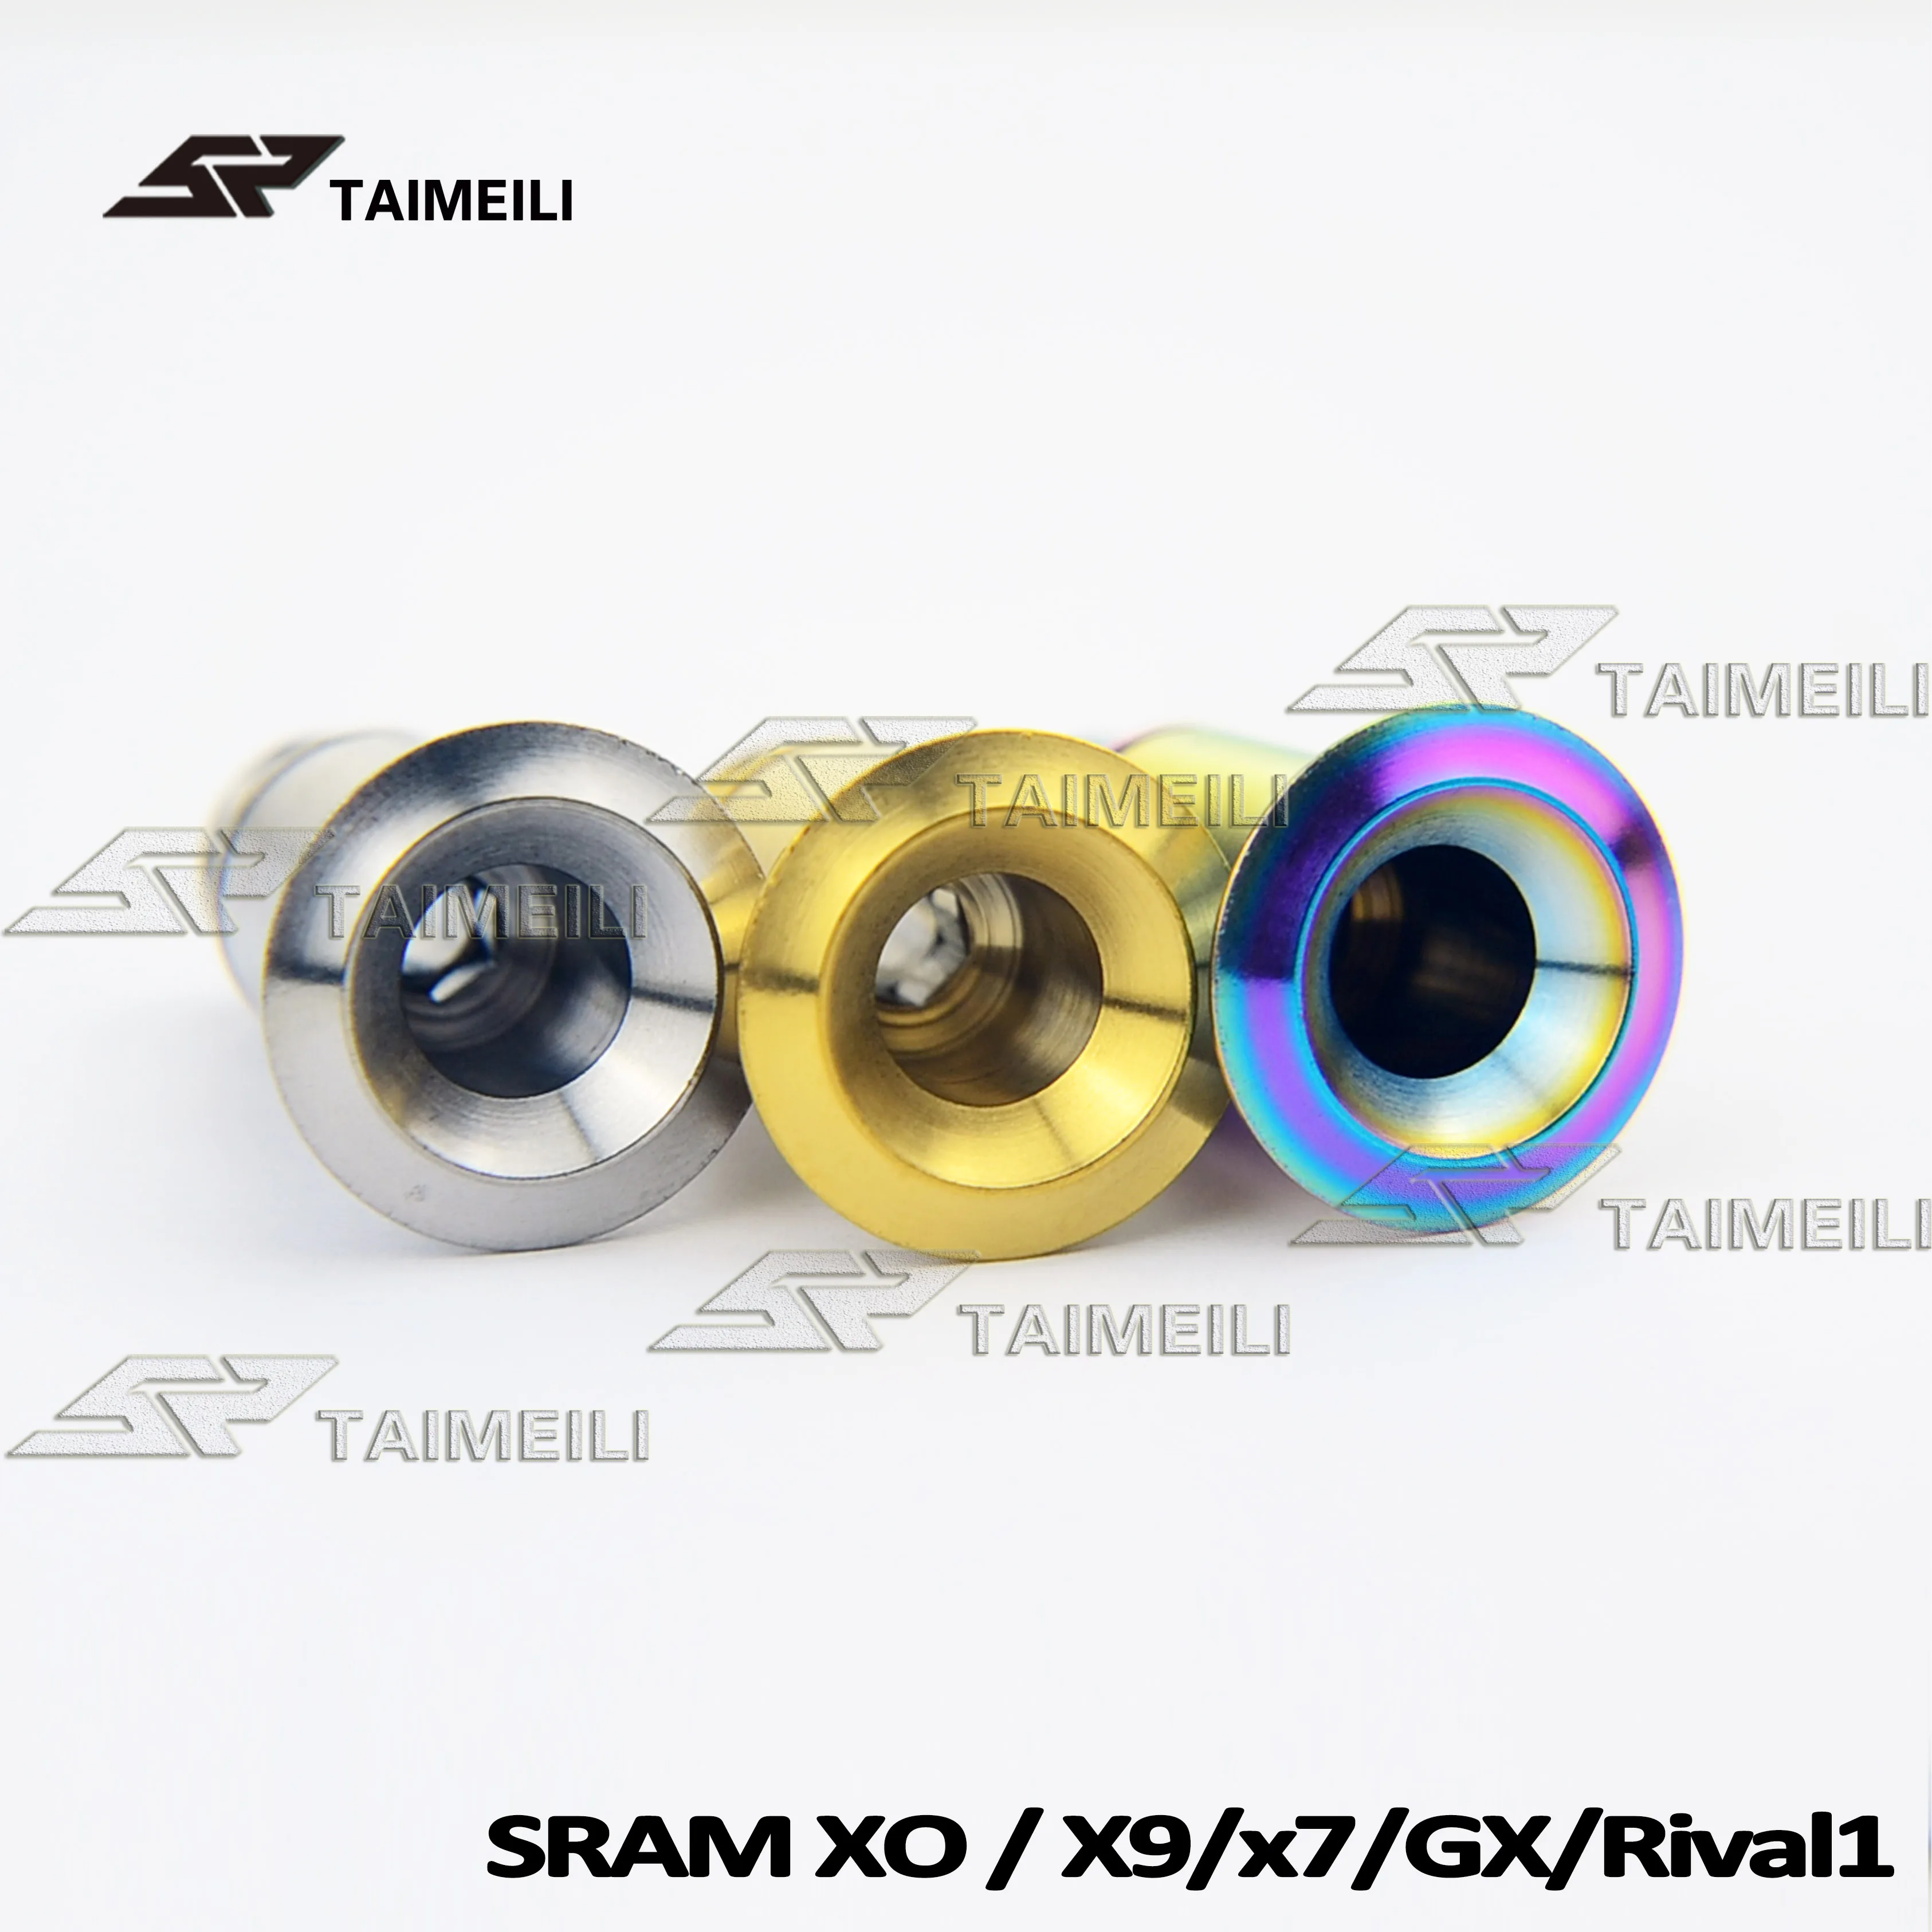 TAIMEILI SRAM XO/X9x7GX/RIVAL1 крепежные винты вала GR5 титановые винты патч